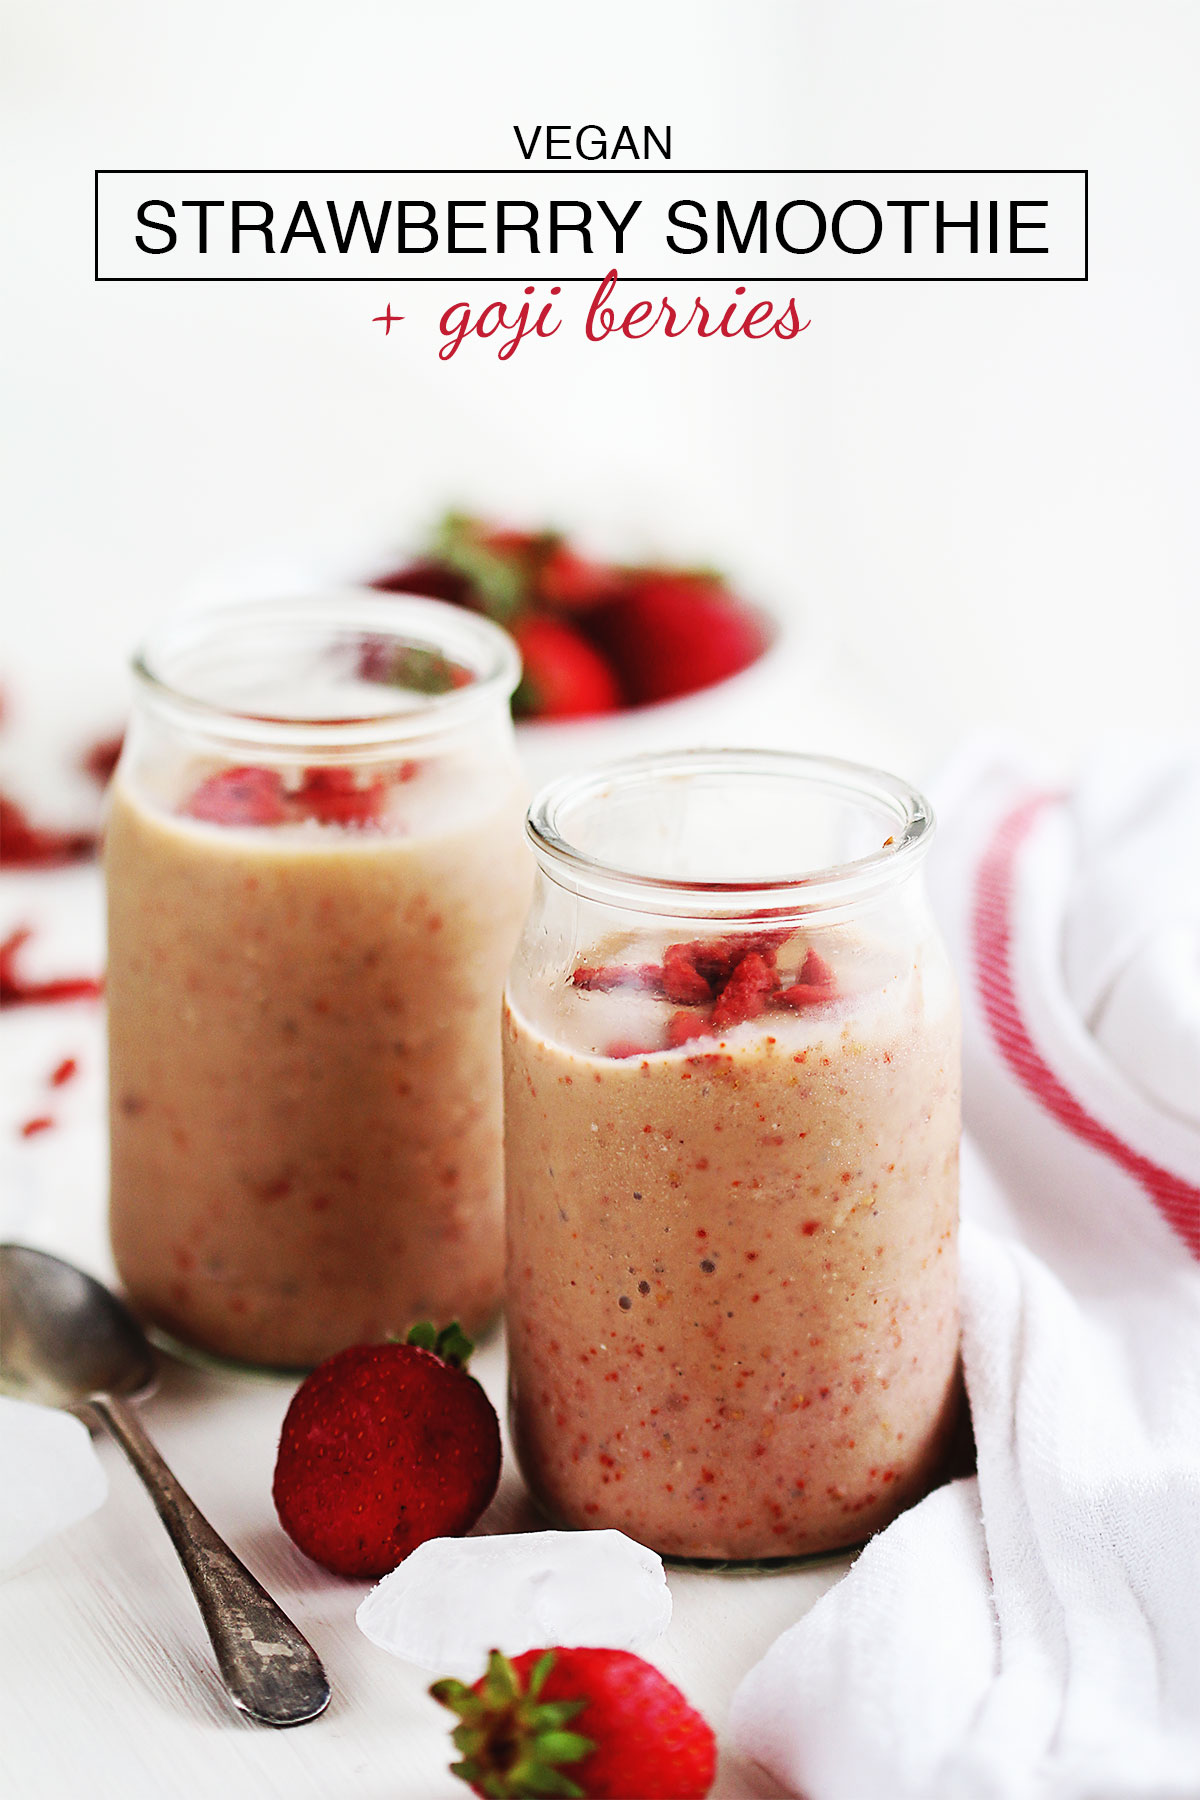 Strawberry smoothie recipe with Goji berries